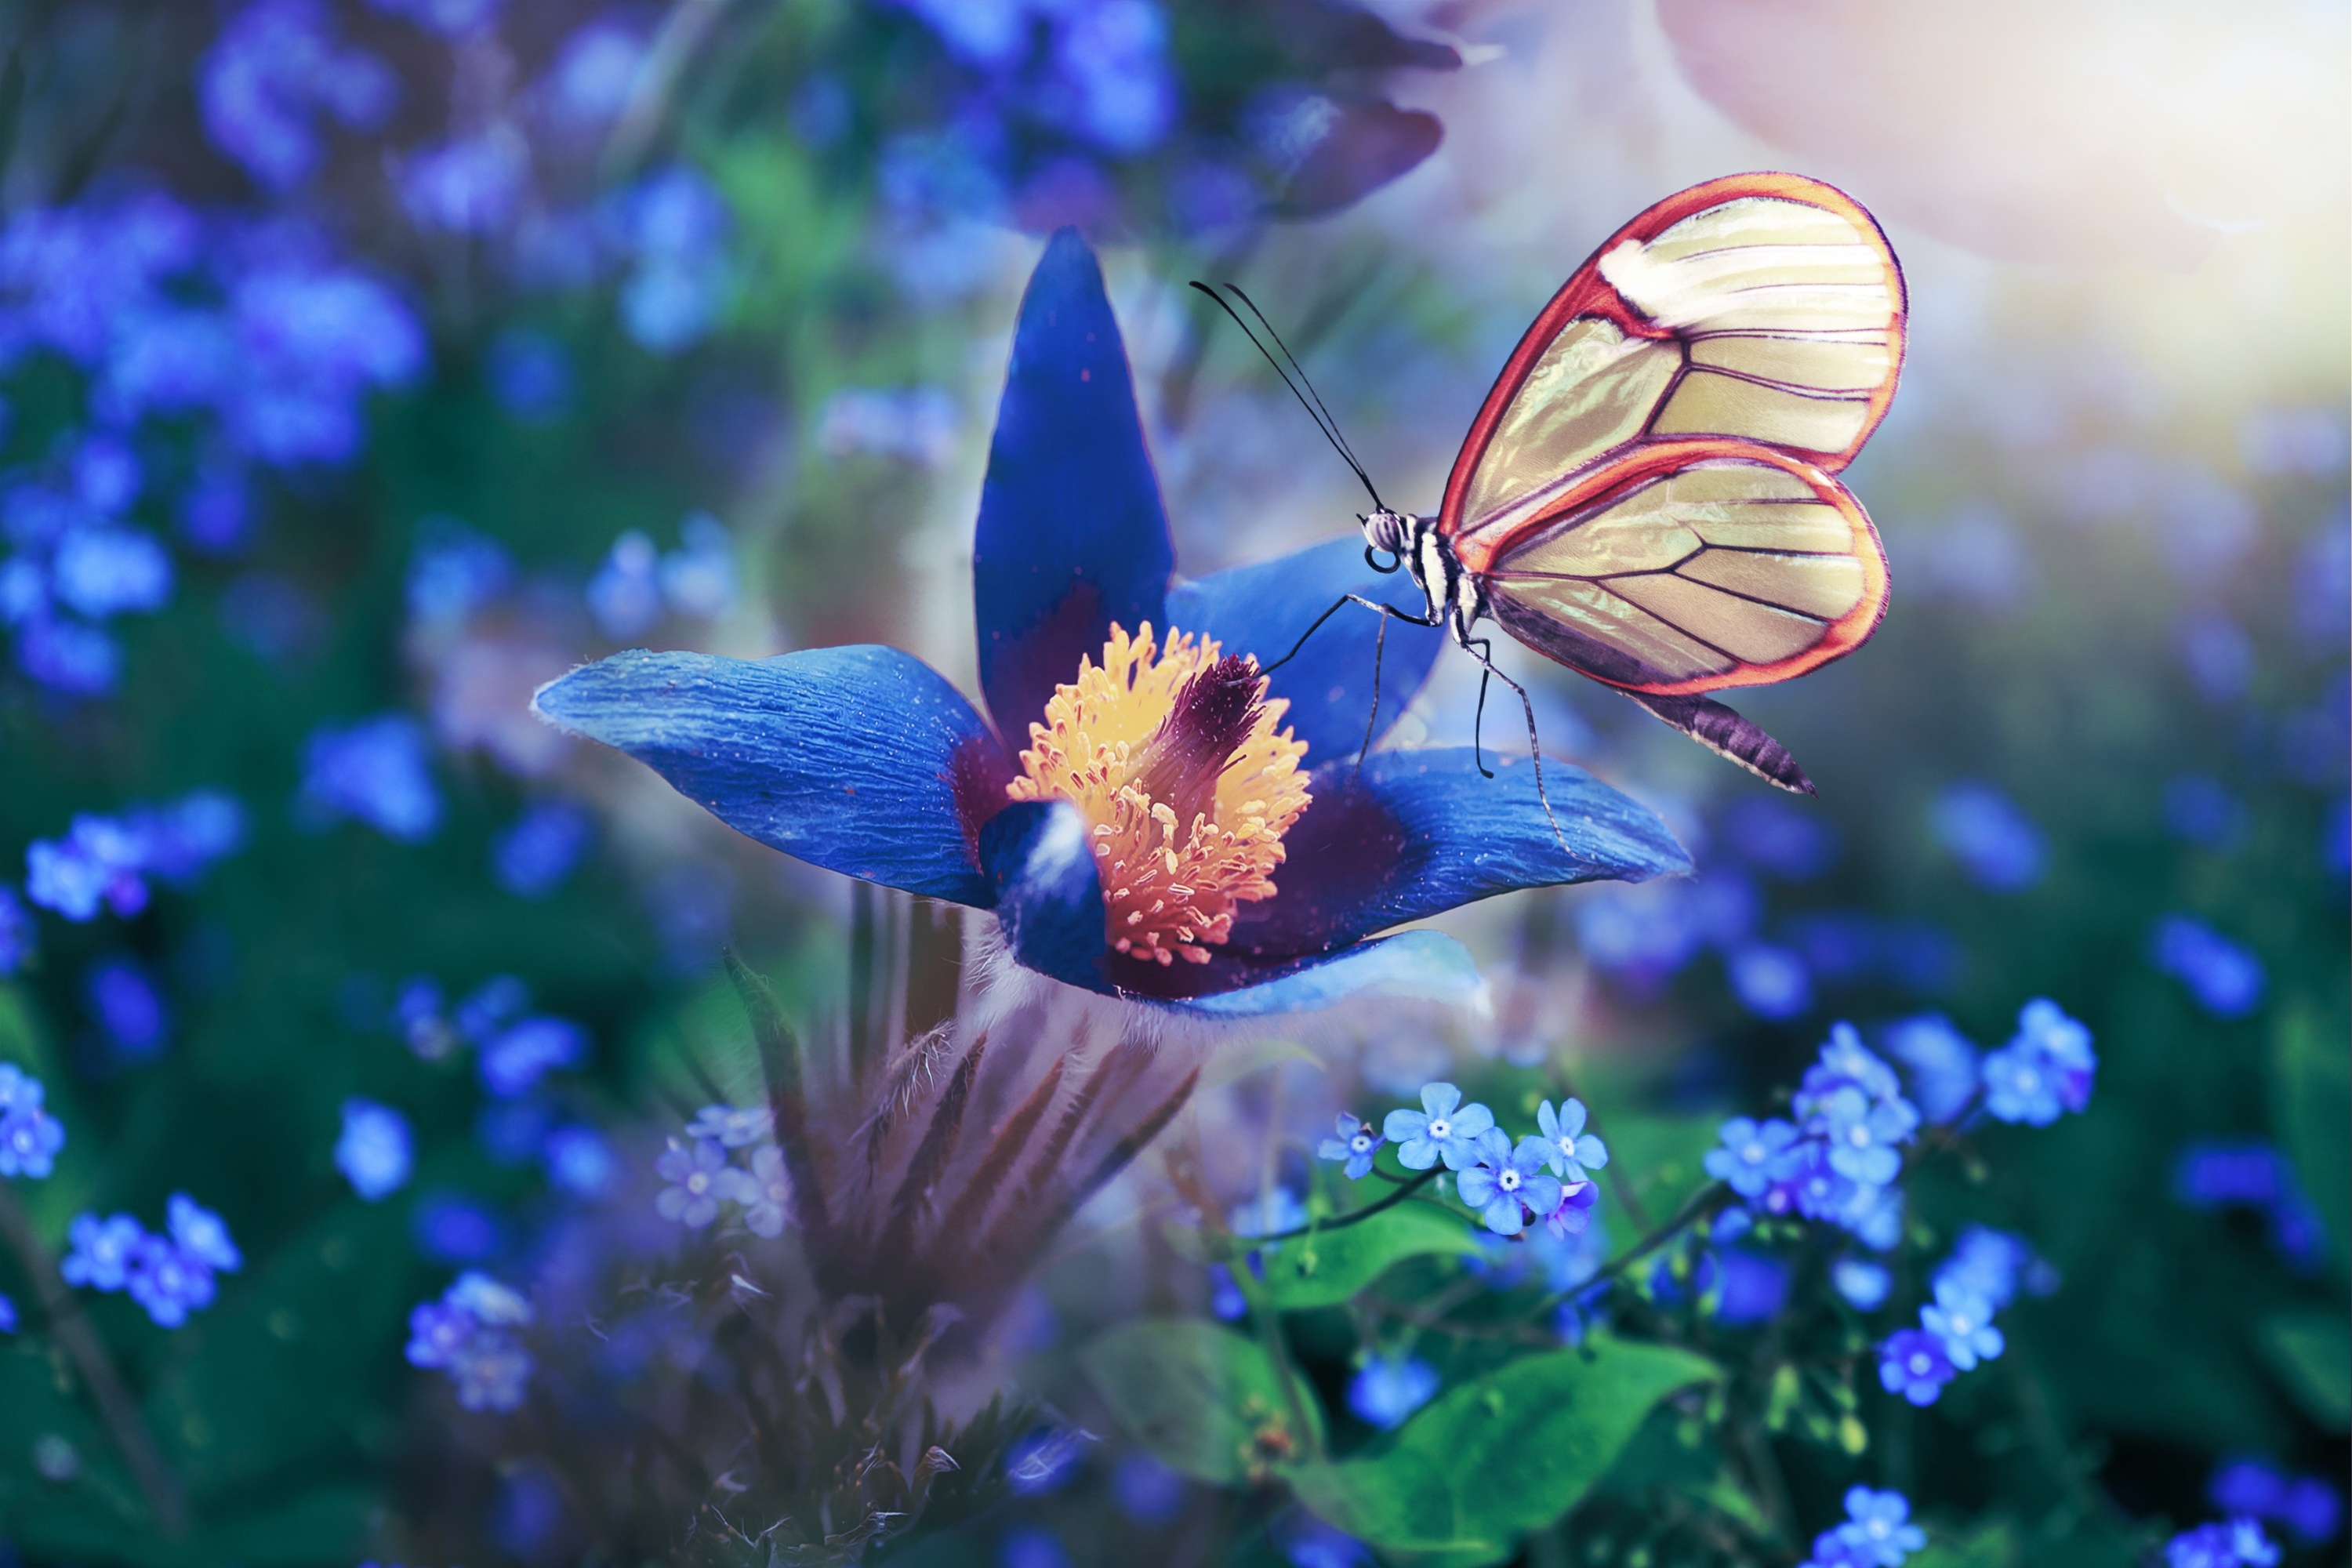 971442 descargar imagen naturaleza, animales, mariposa, anémona, flor azul, flor, insecto, macrofotografía: fondos de pantalla y protectores de pantalla gratis